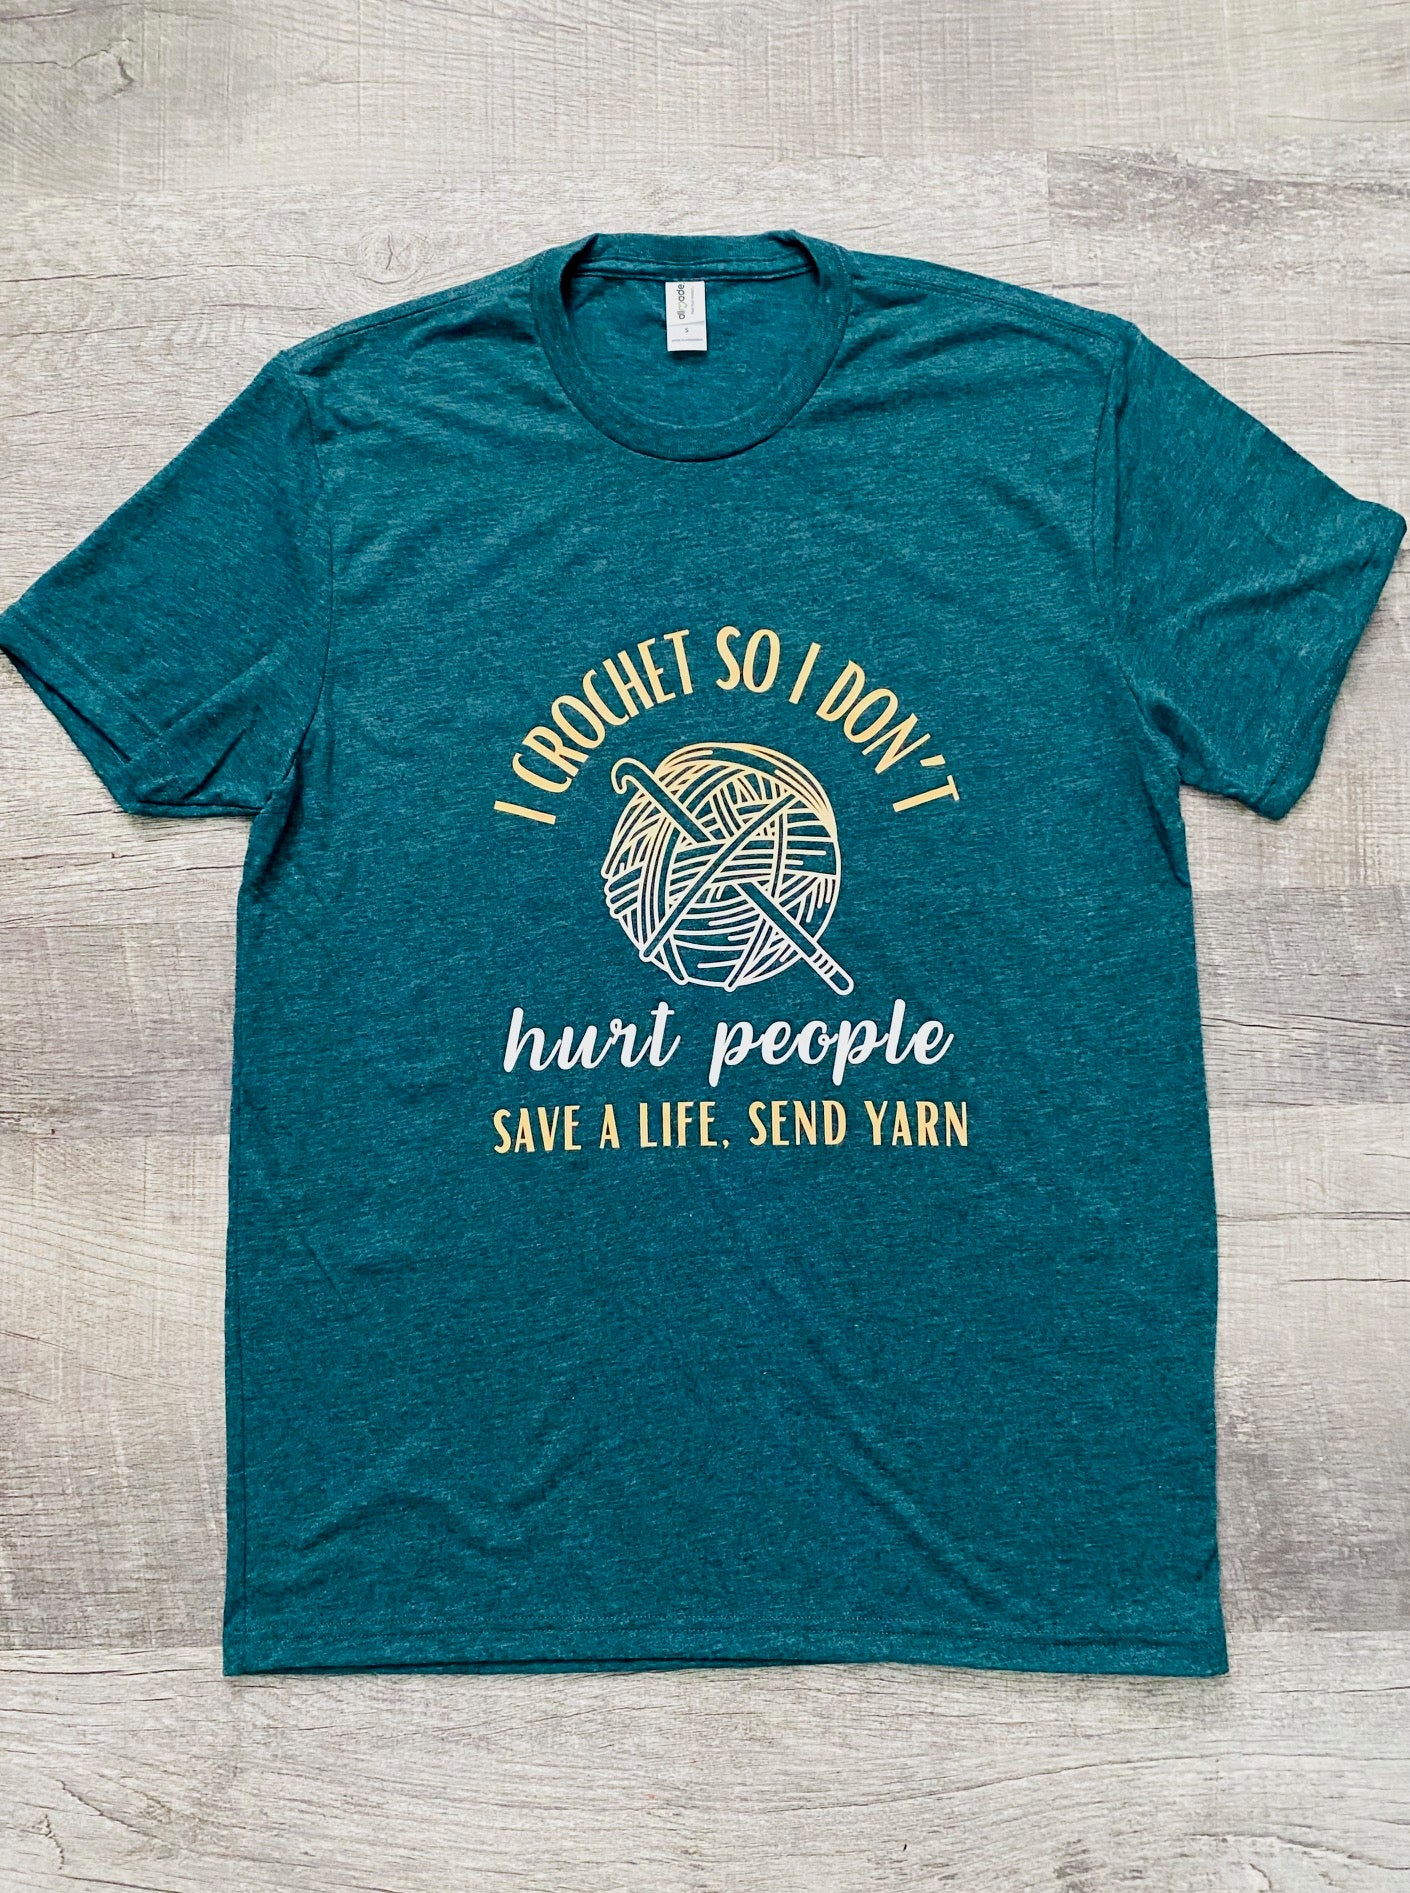 I Crochet So I Don't Hurt People on Sea Green Eco-Friendly T-Shirt